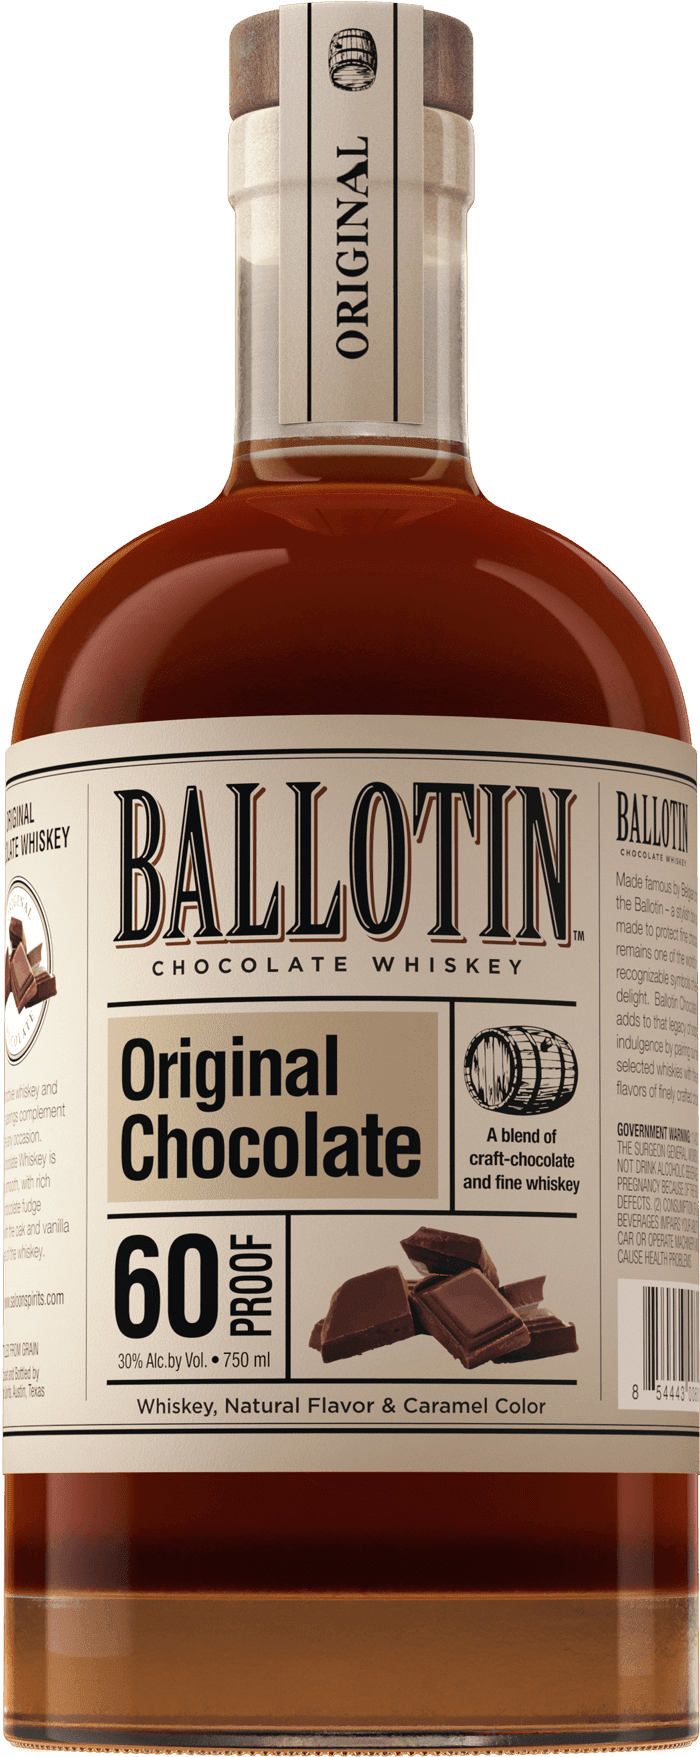 ballotin-original-chocolate-whiskey